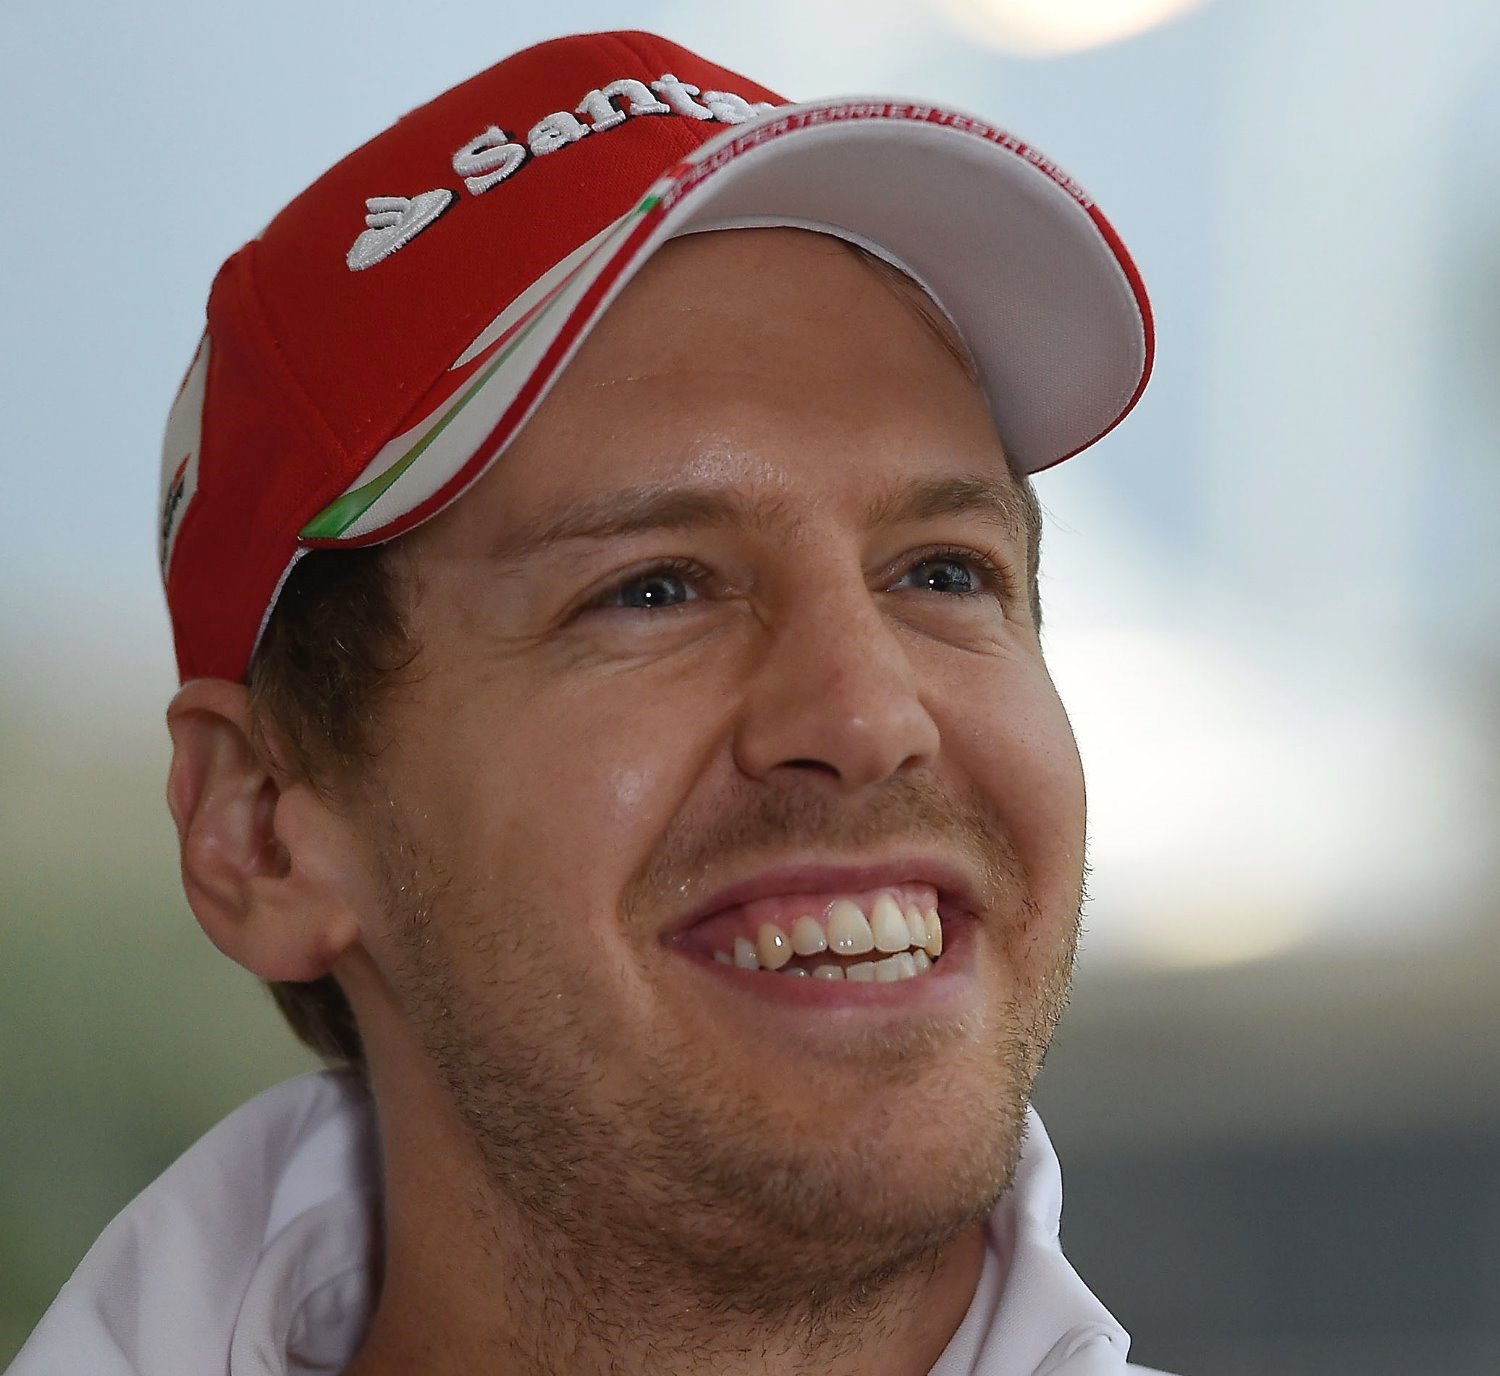 Vettel must be hallucinating